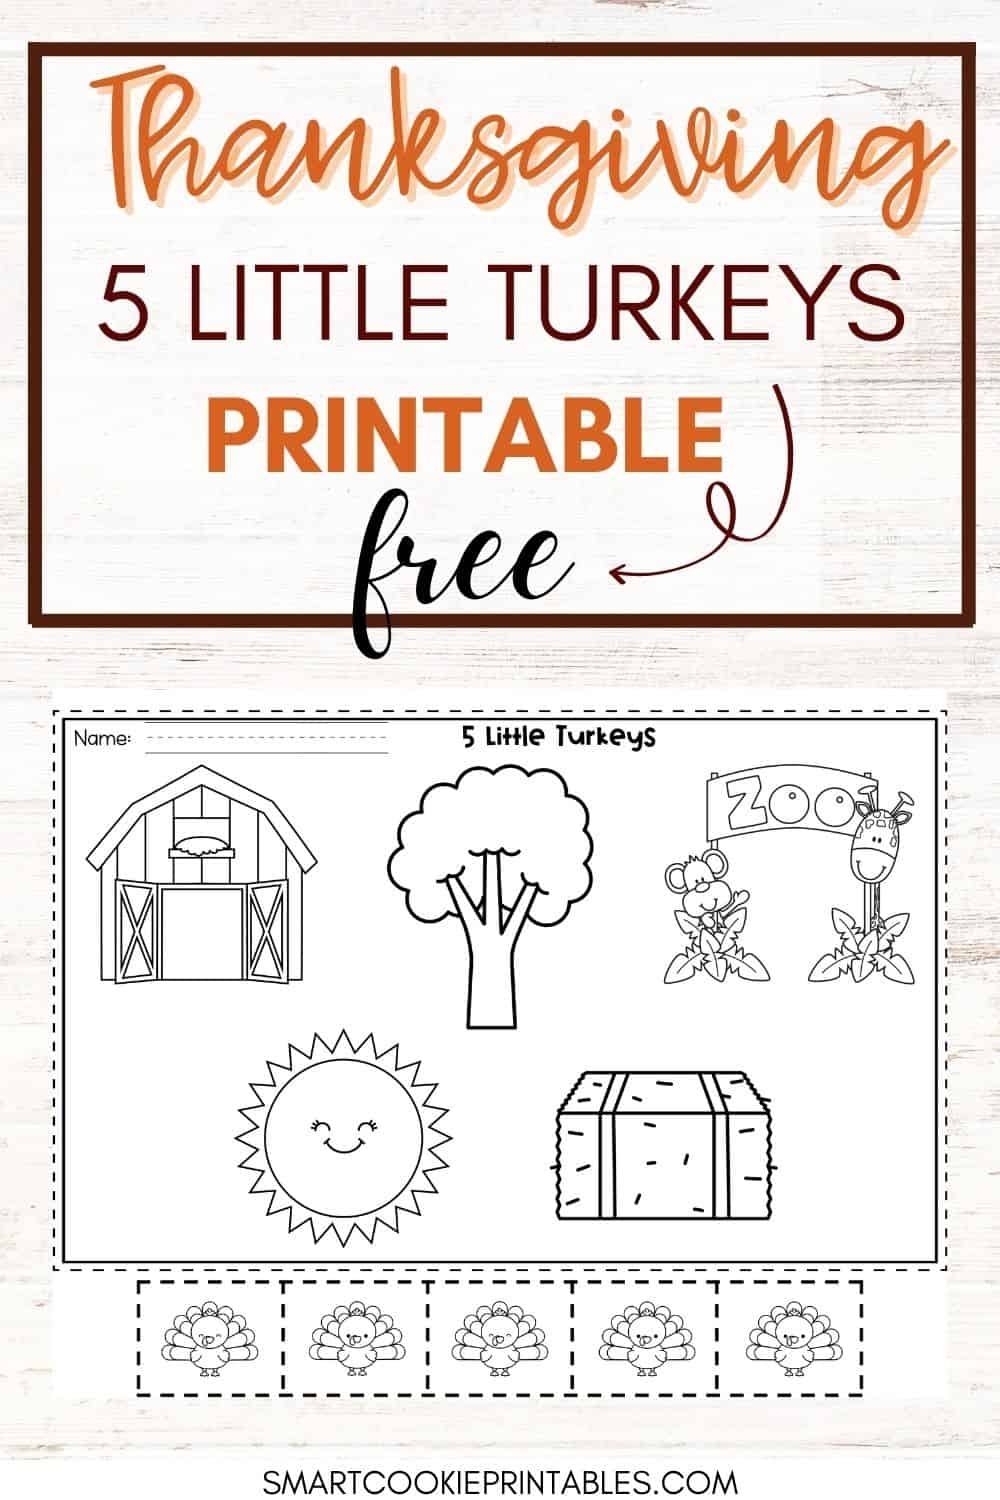 Free 5 Little Turkeys Storyboard Printable Activity For Kids Smart Cookie Printables